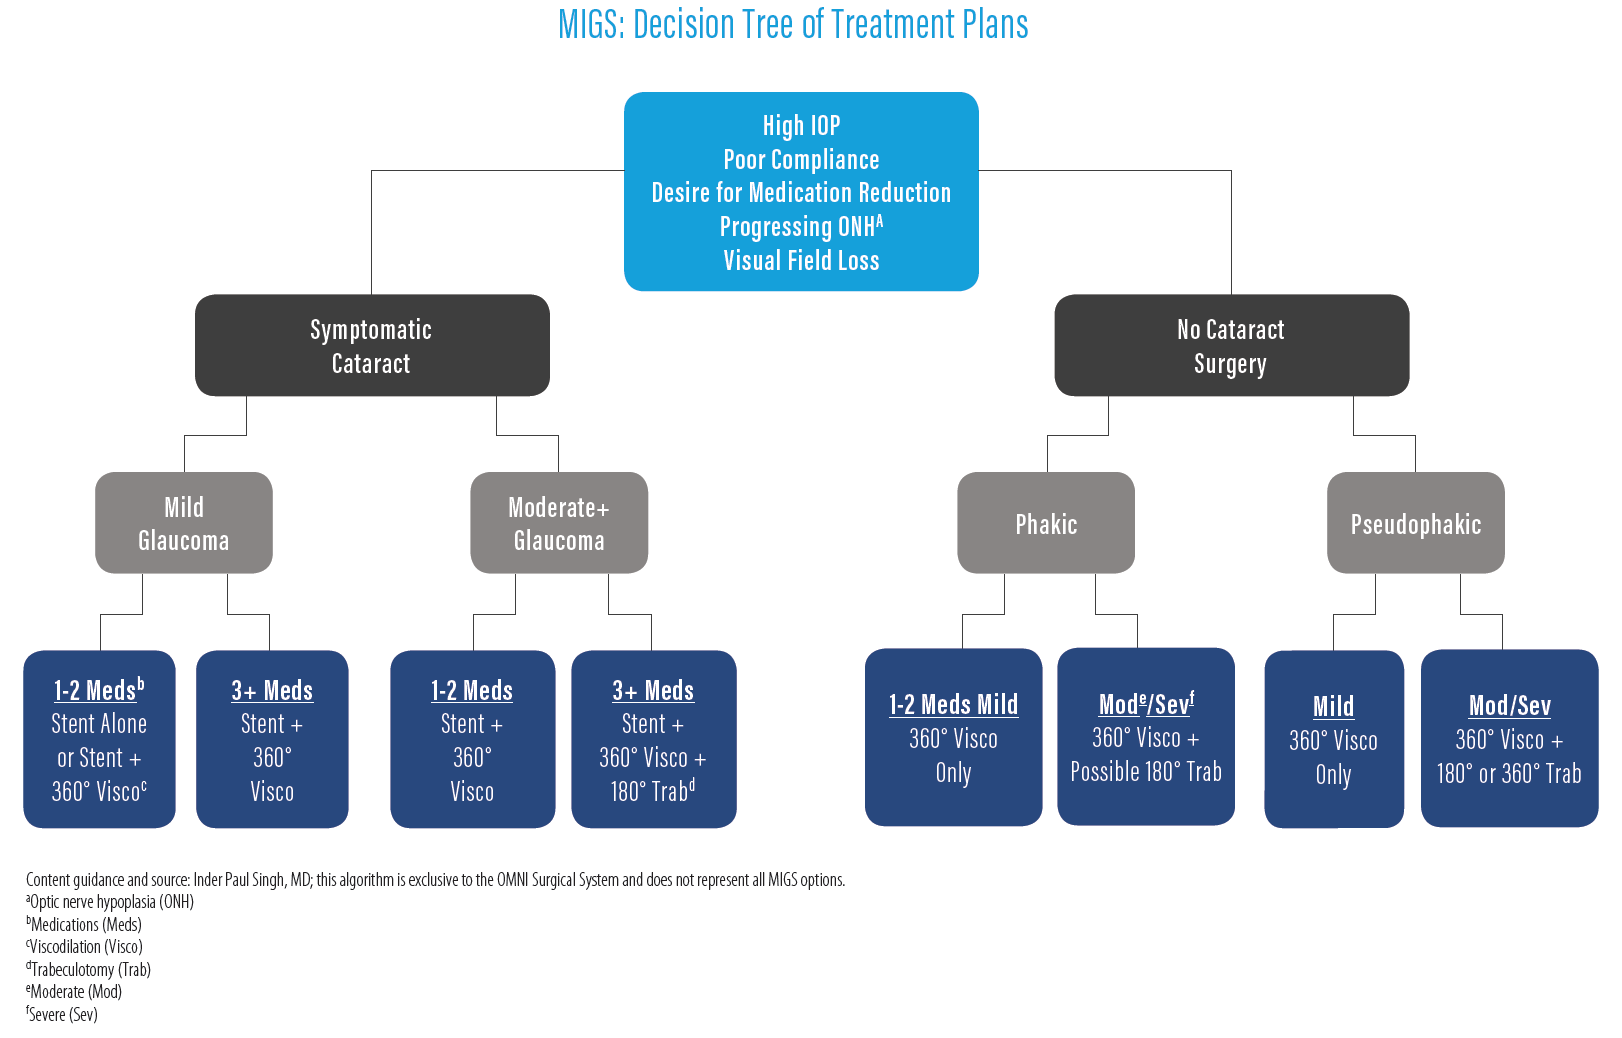 MIGS decision tree